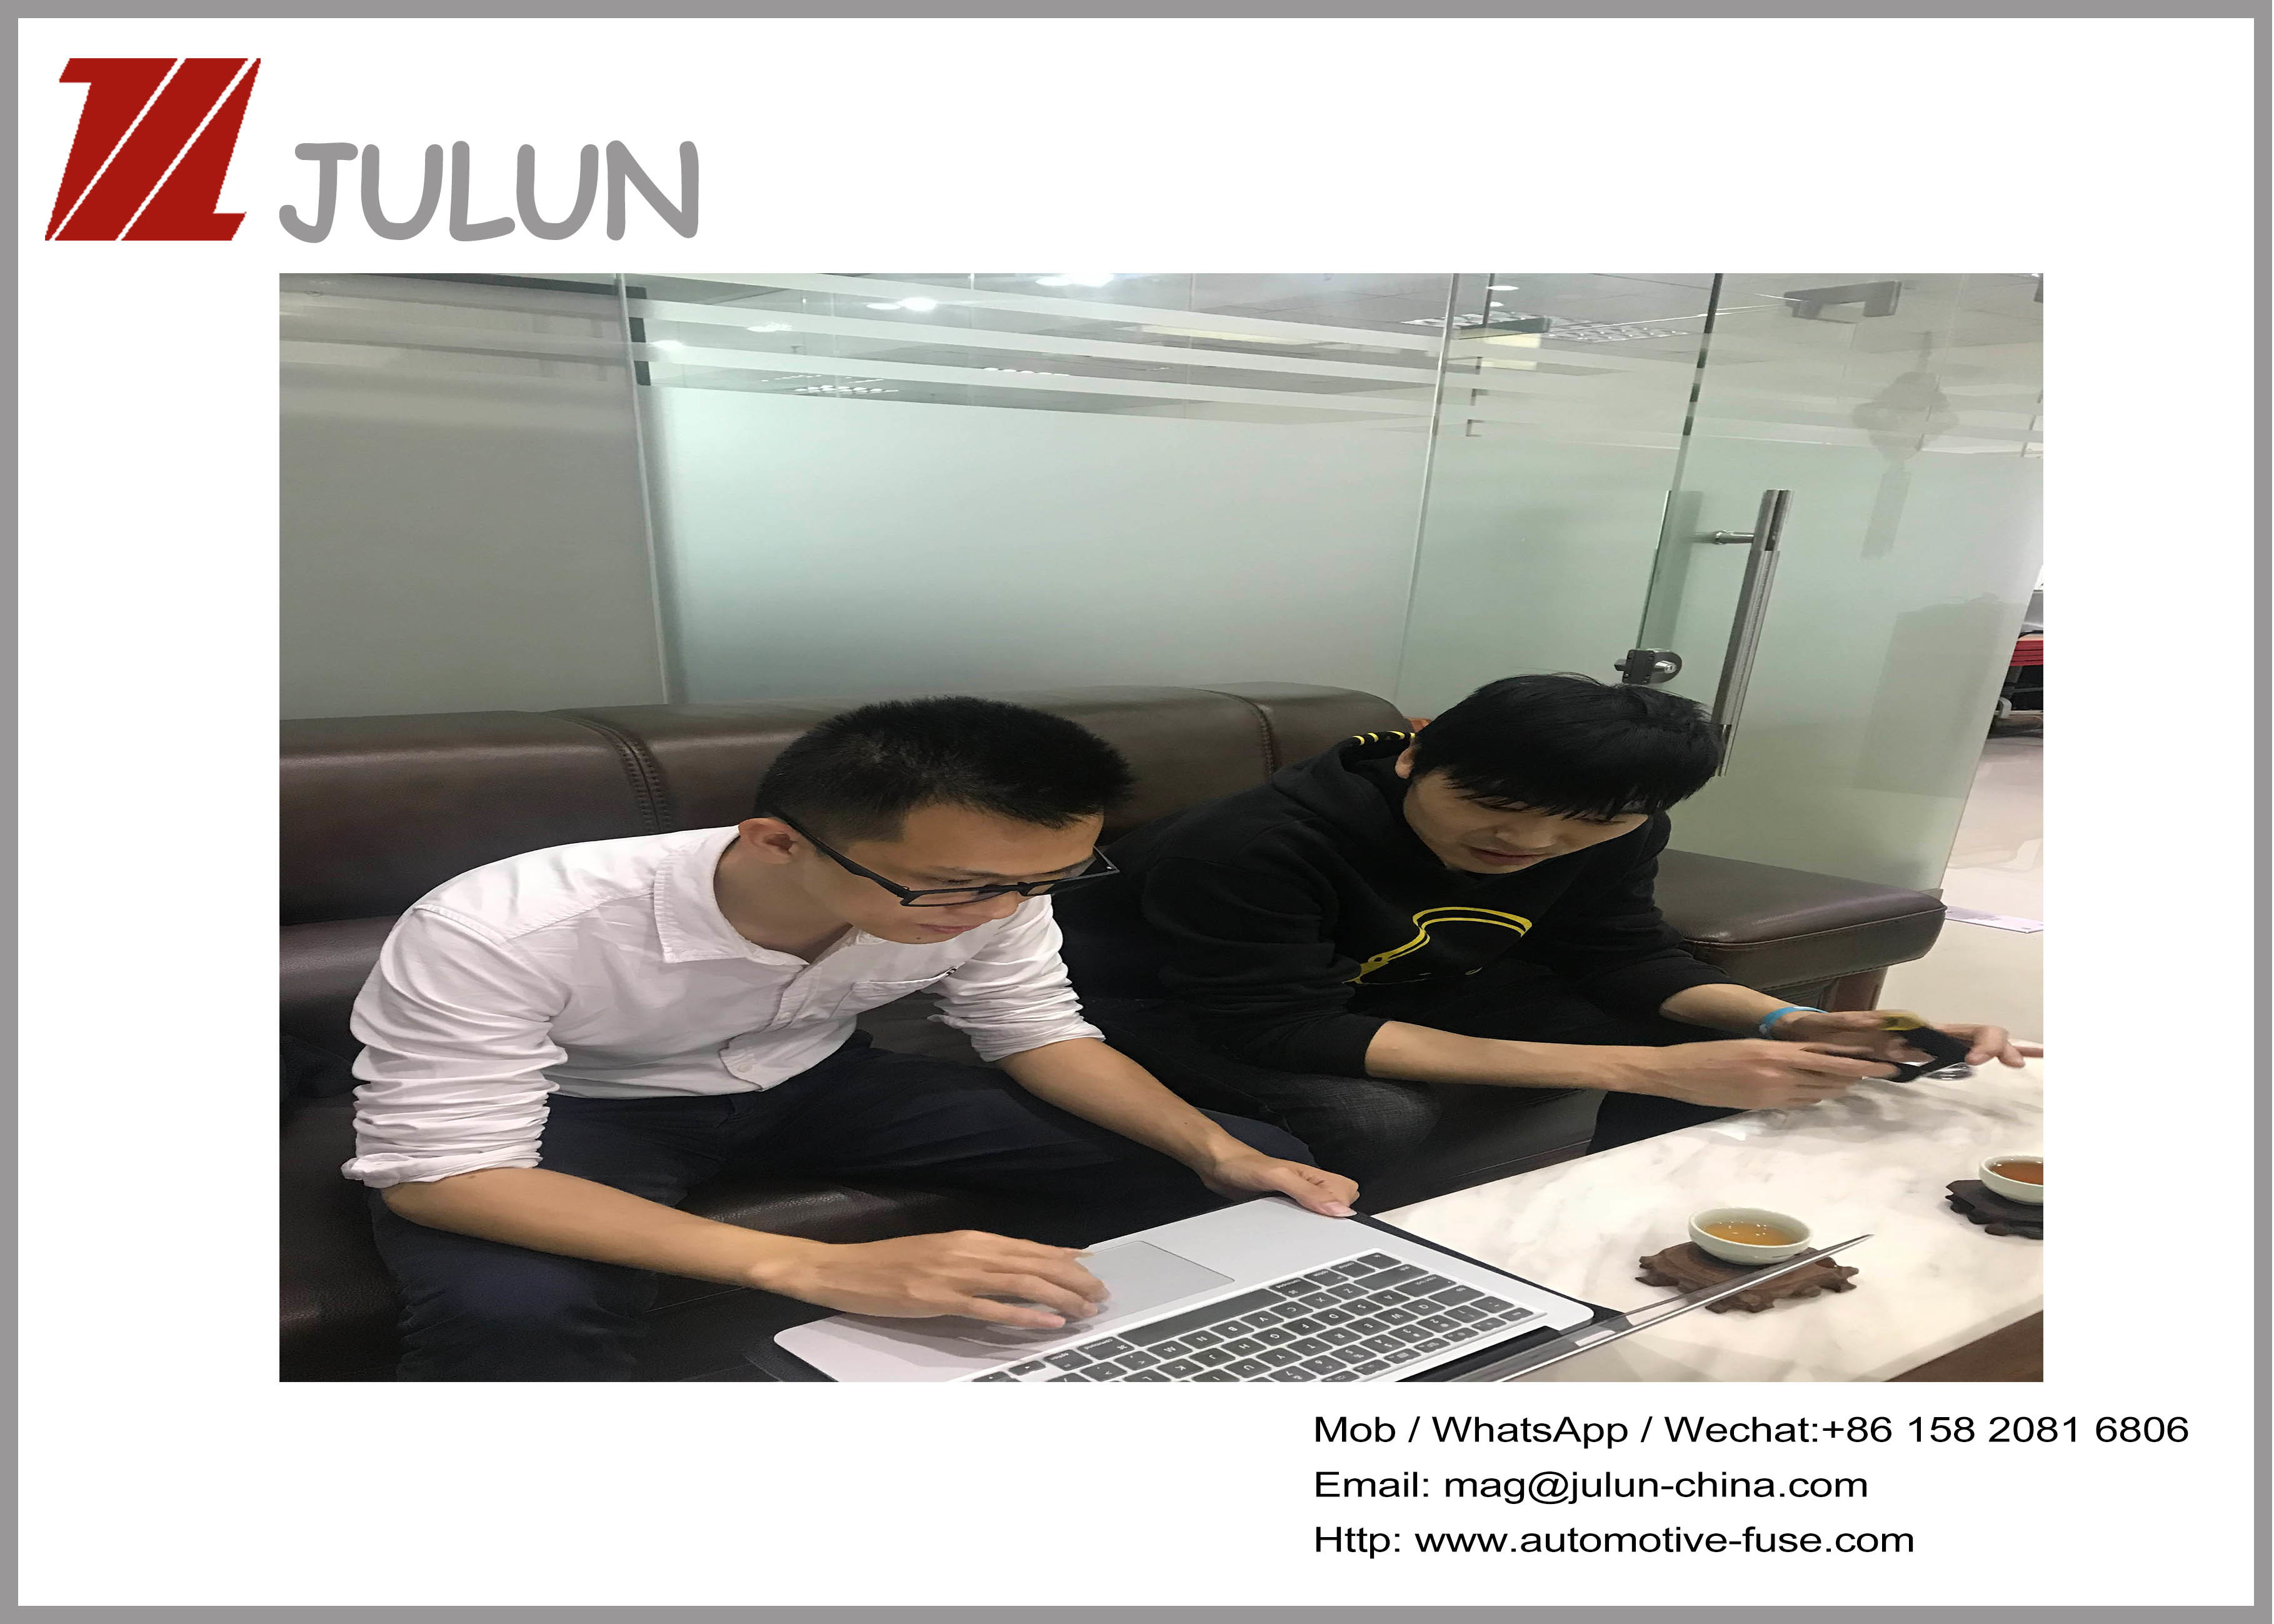 China JULUN (H.K)CO.,LTD (DONGGUAN JULUN ELECTRONICS CO.,LTD) Perfil da companhia